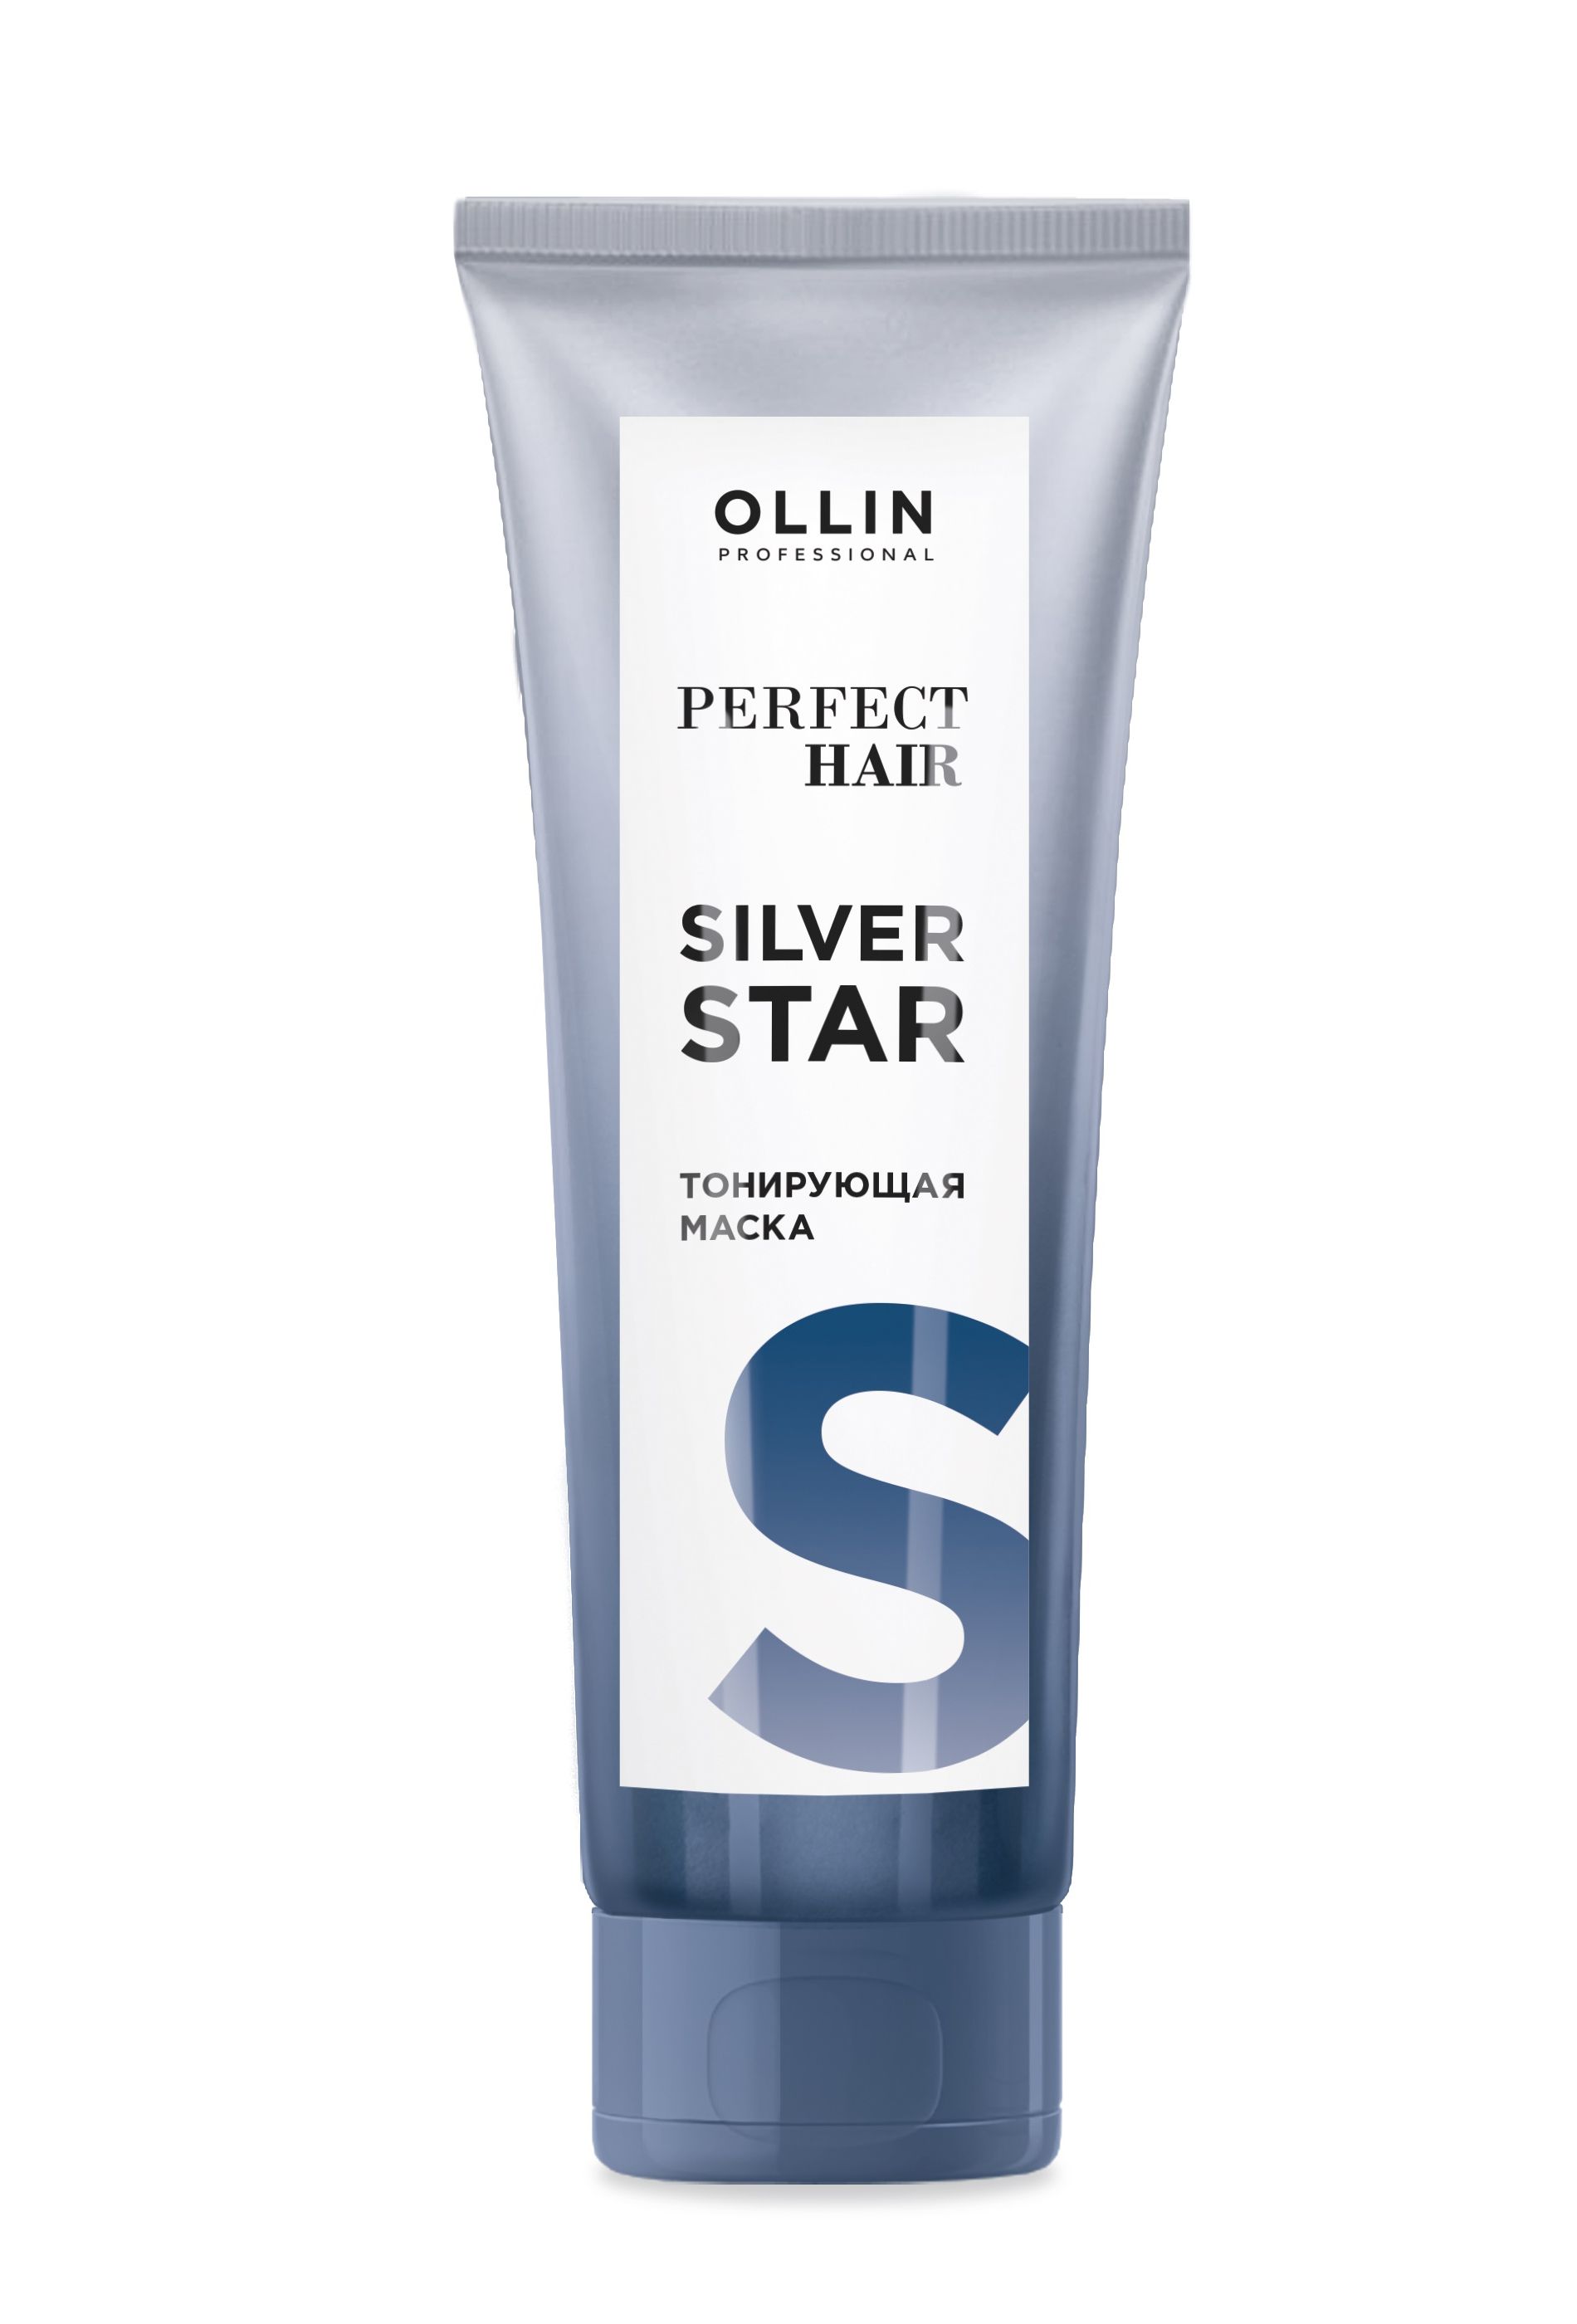 Ollin, Тонирующая маска «Silver Star» серии «Perfect Hair», Фото интернет-магазин Премиум-Косметика.РФ